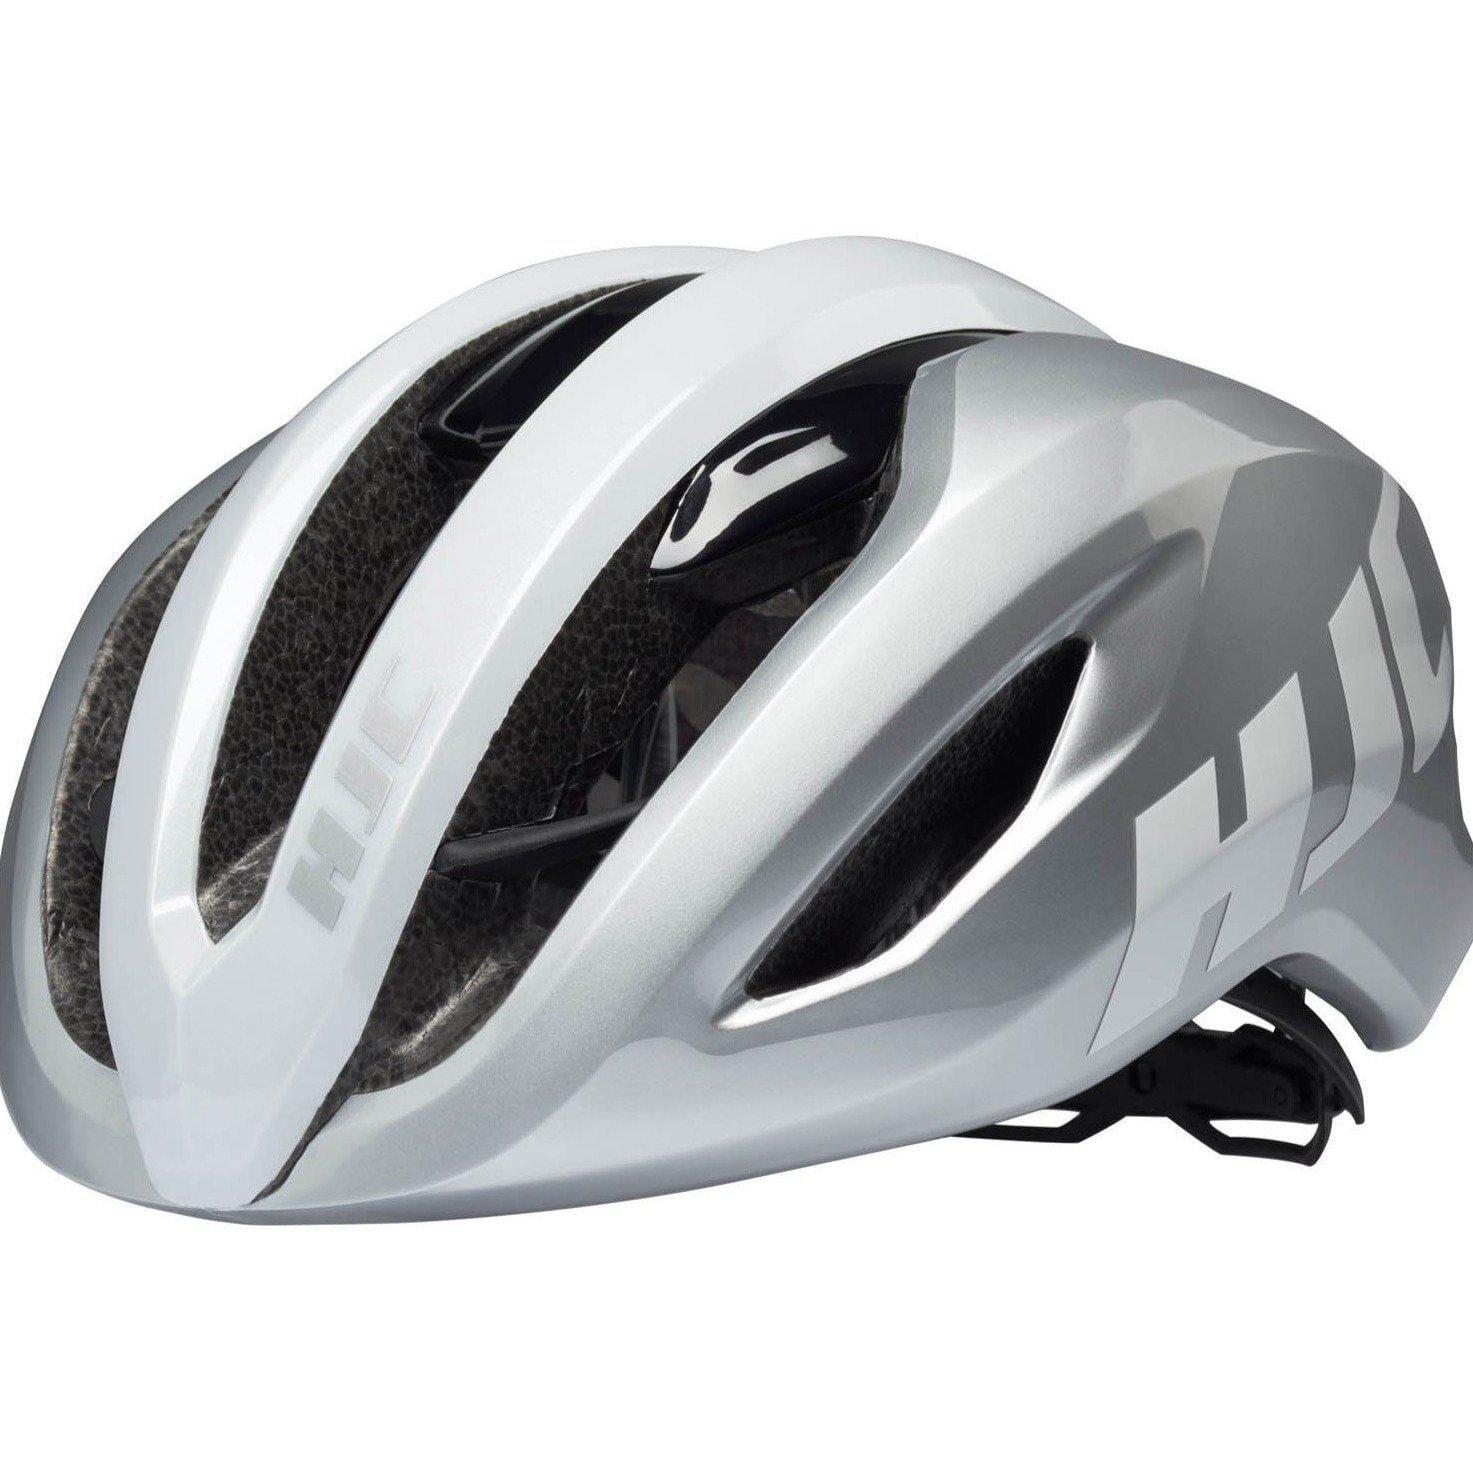 HJC Veleco: Streamlined, Comfy Helmet for Road Cycling 1/5